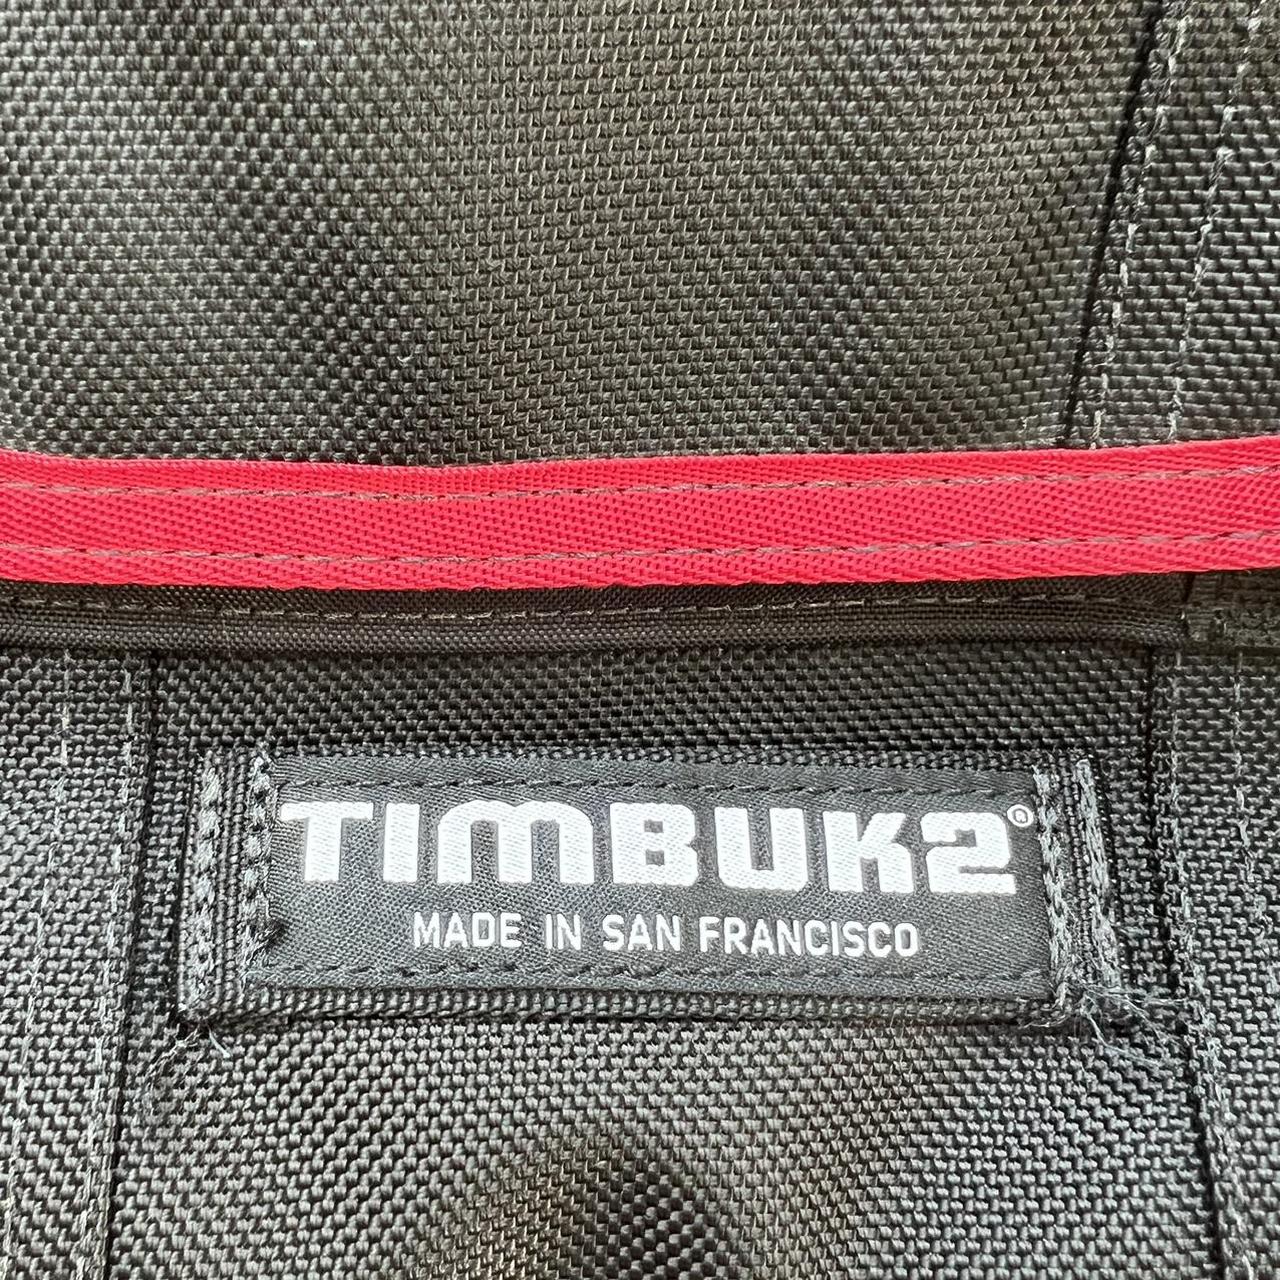 Timbuk2 small classic messenger bag in basically - Depop